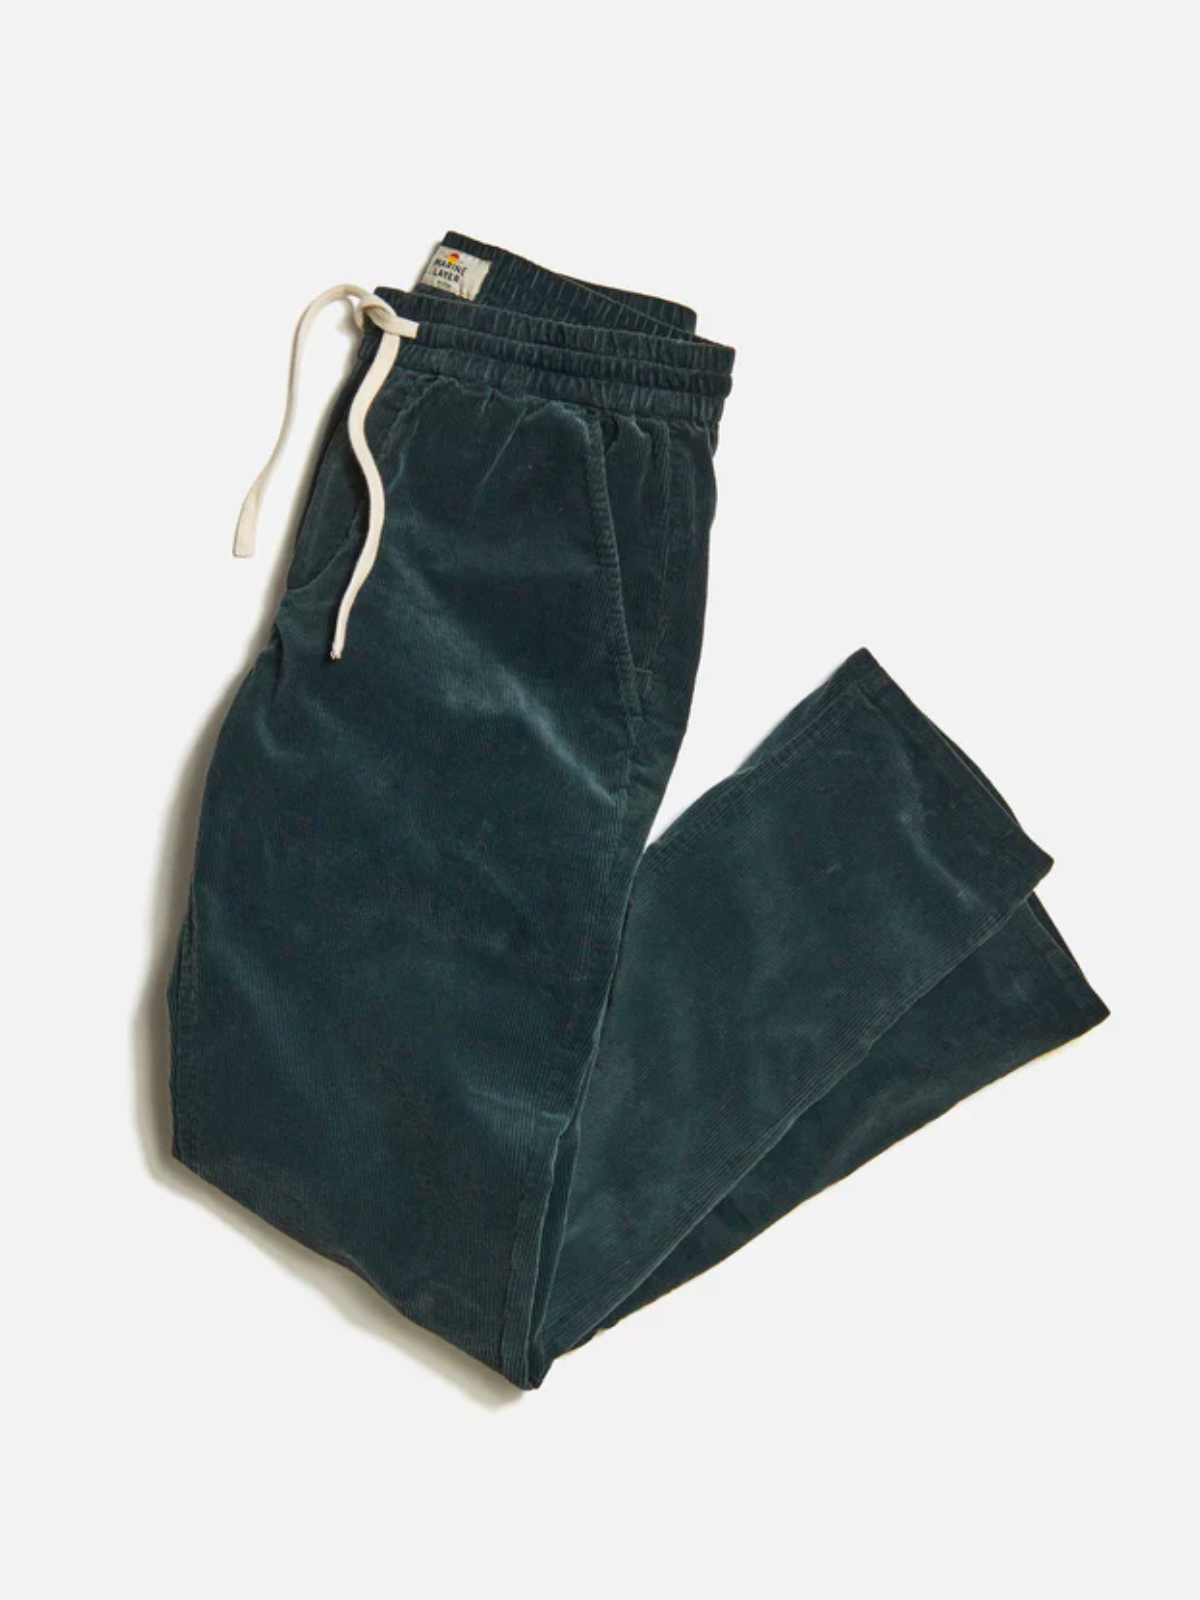 marine layer saturday cord pant green gables drawstring elastic waistband standard fit trouser kempt athens ga georgia men's clothing store